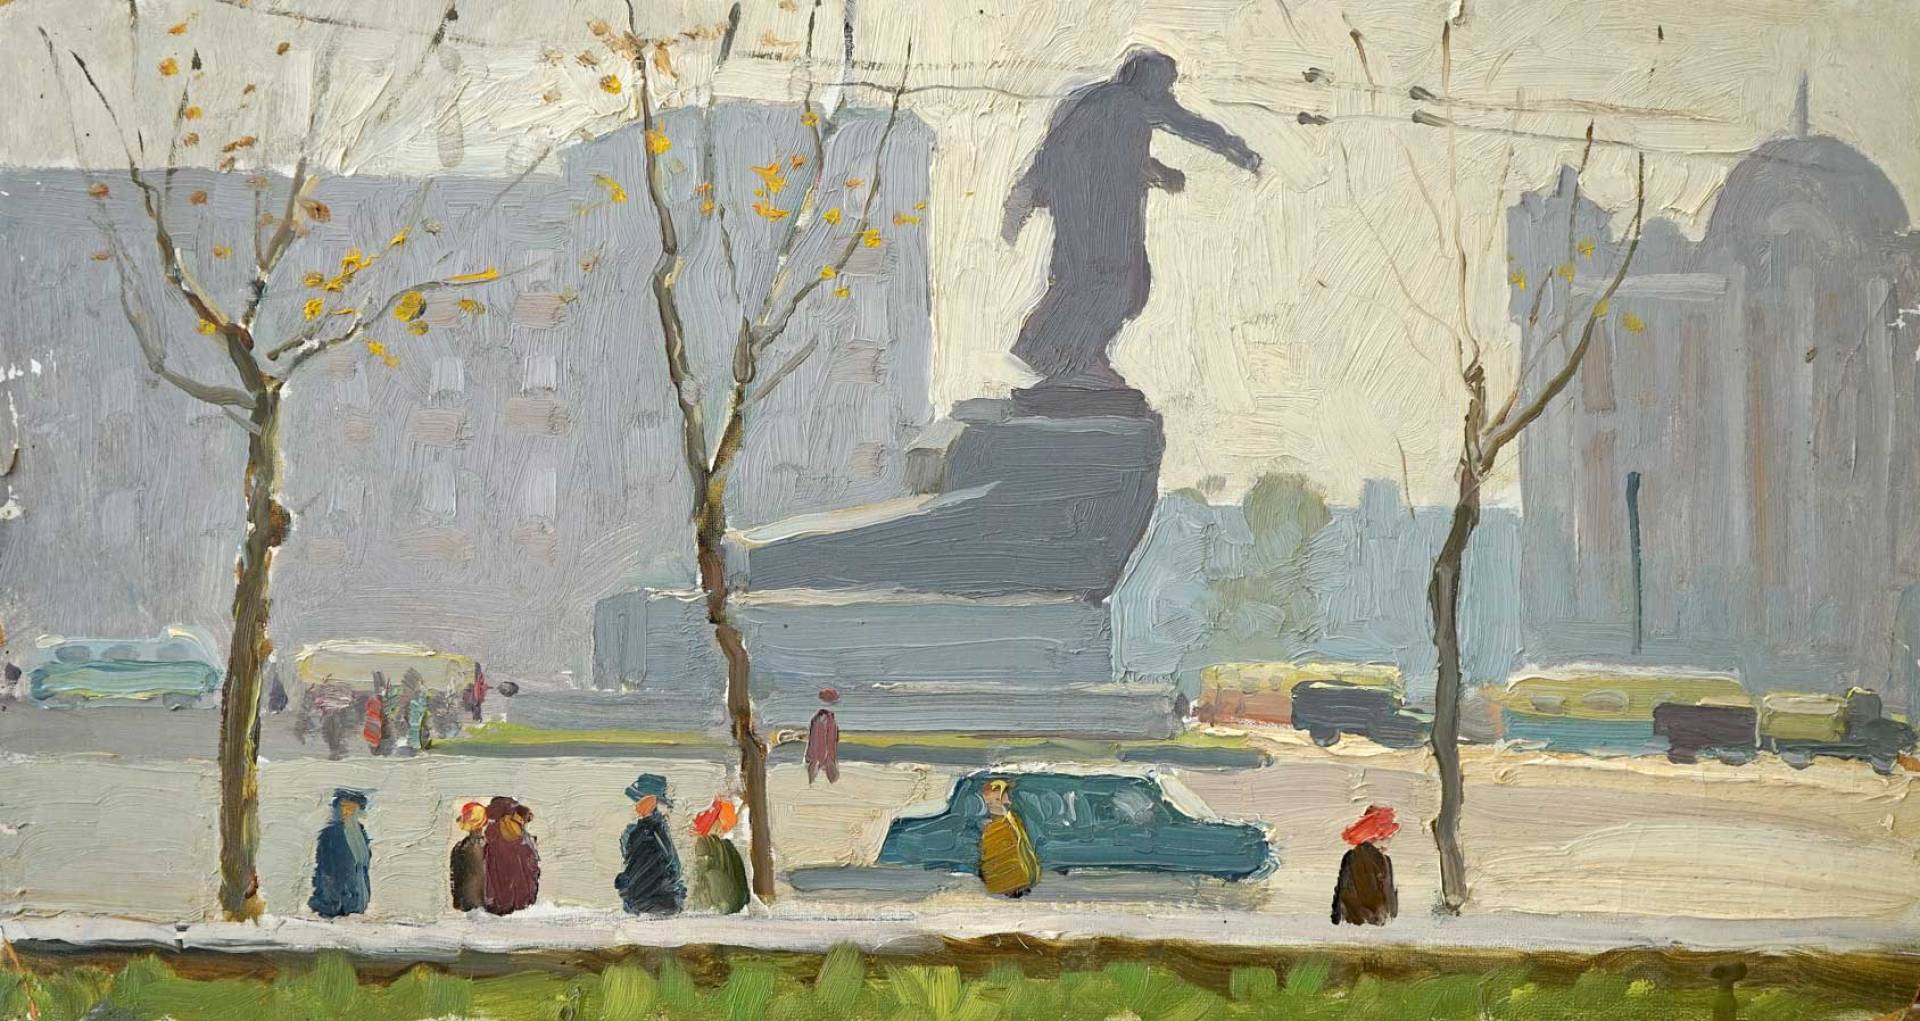 Station Square, Boris Glushkov, Buy the painting Oil